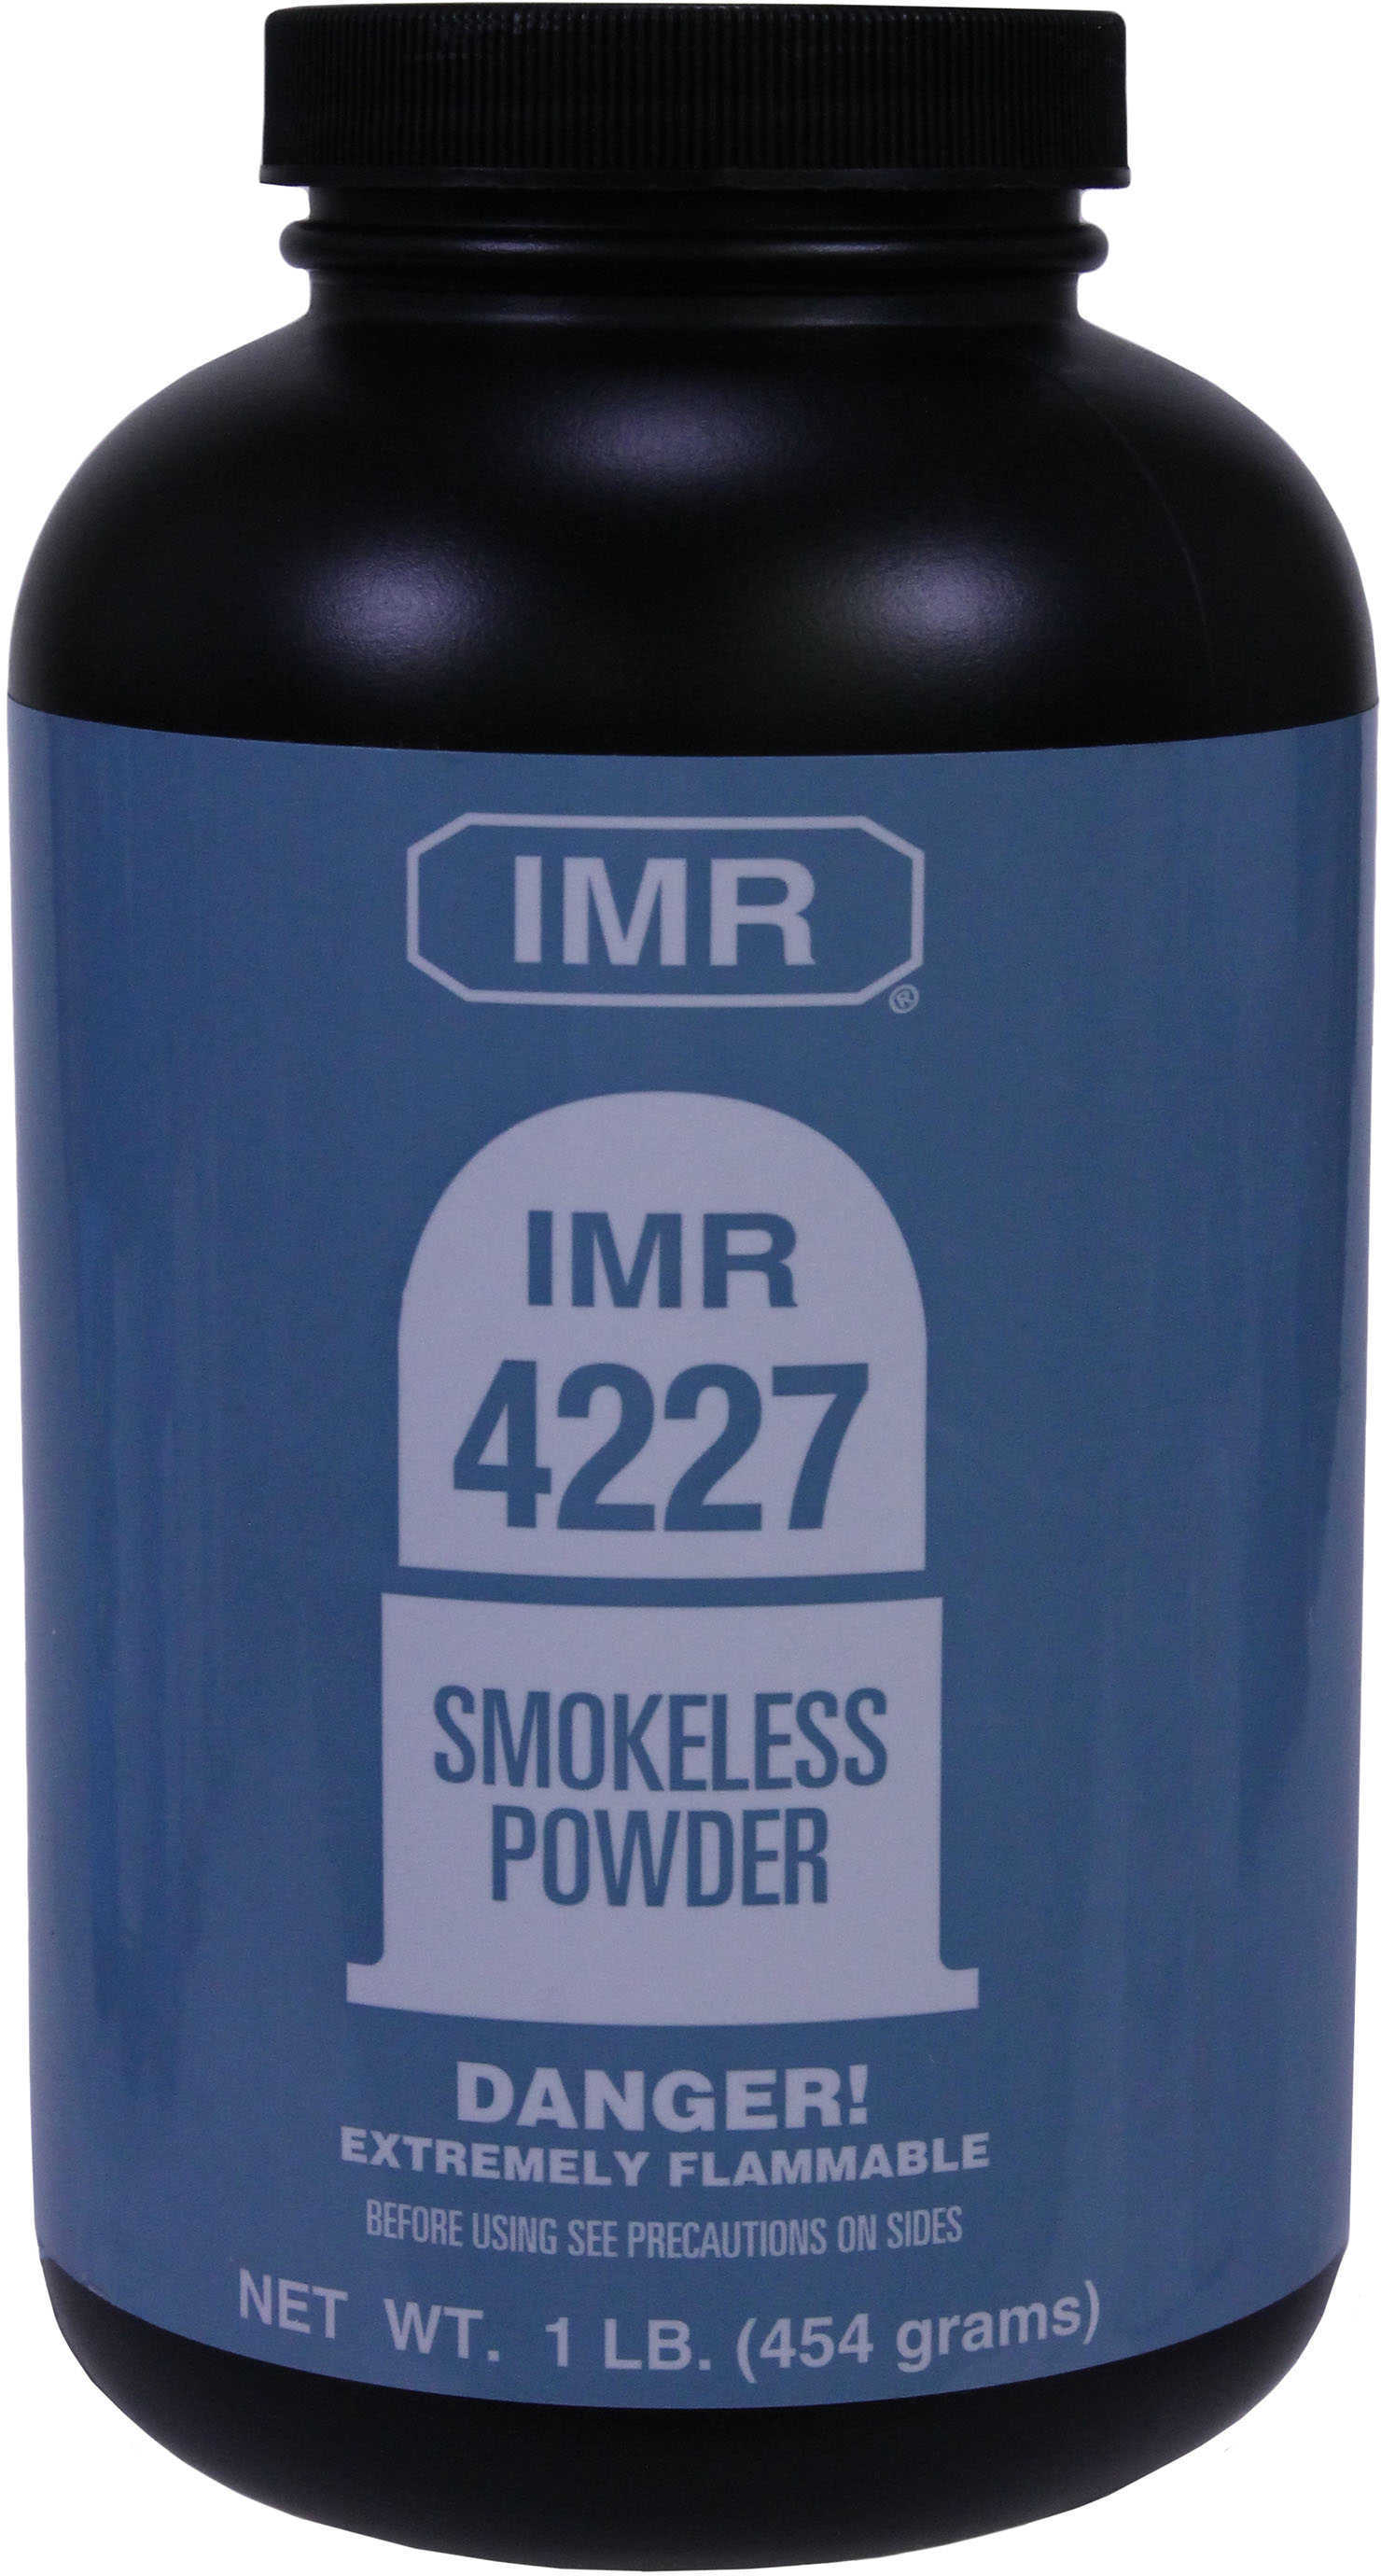 IMR Smokeless Powder 4227 1 Lb Reloading